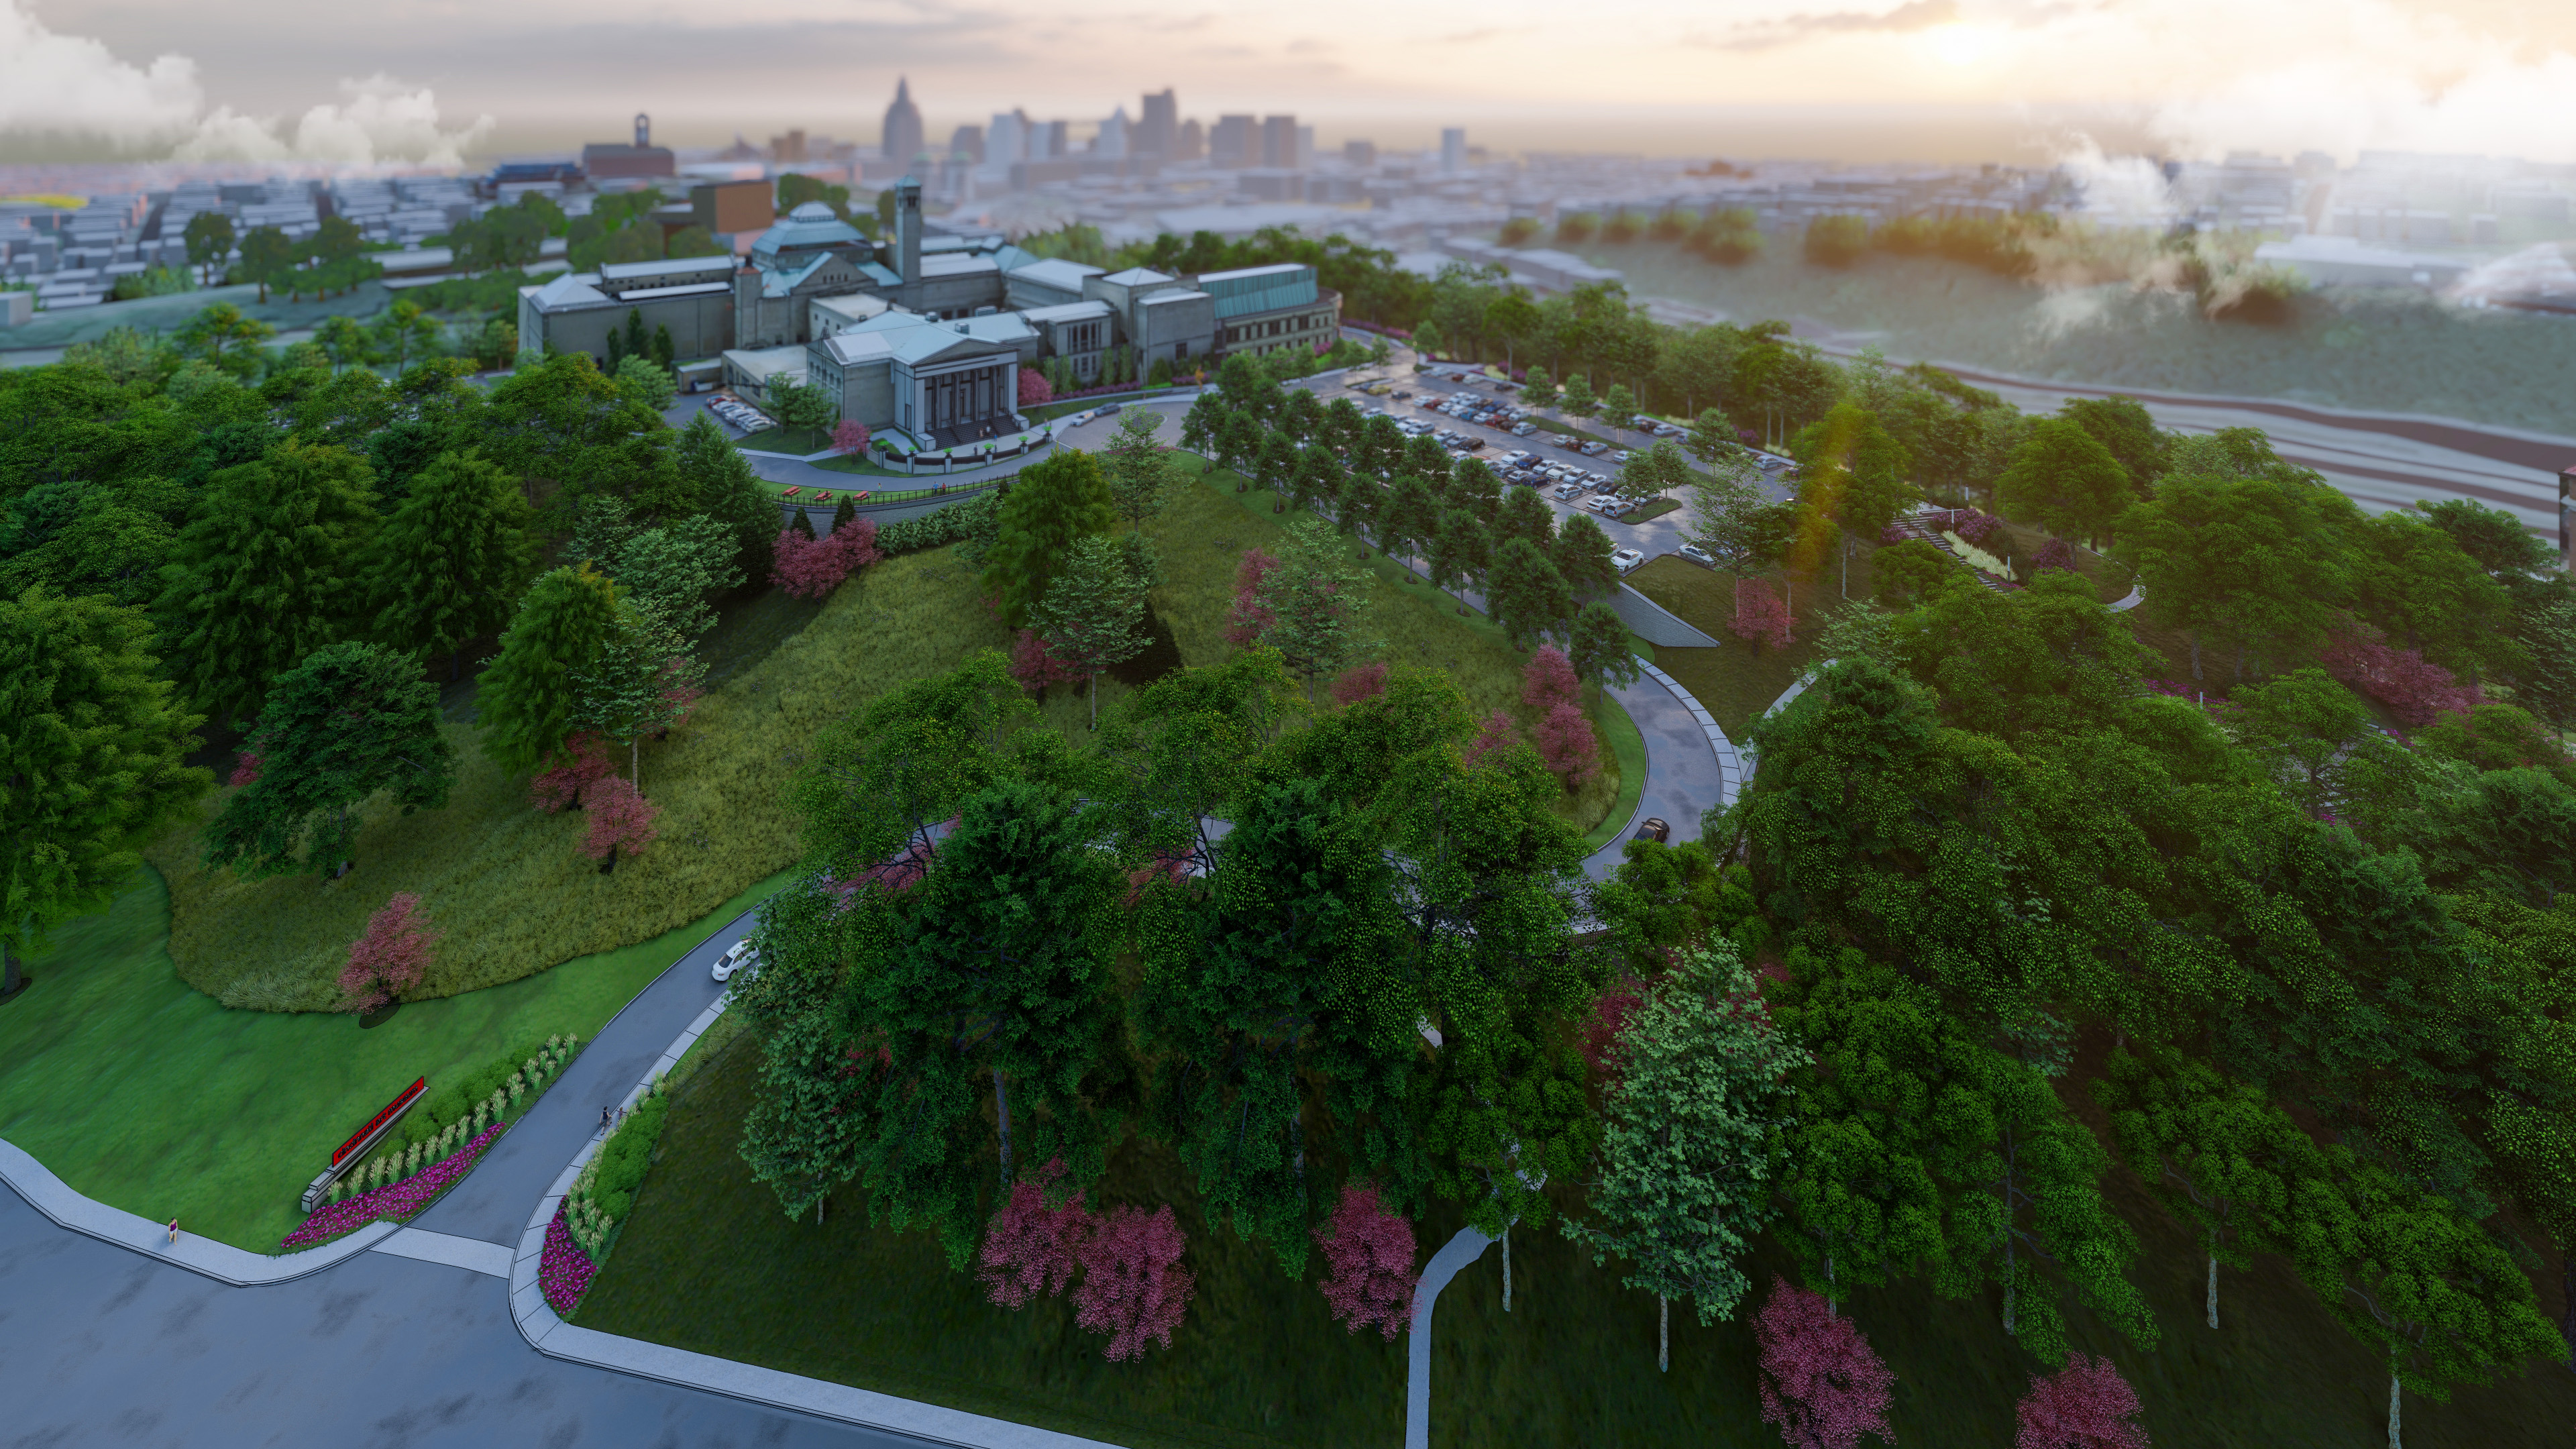 3D rendering of the Cincinnati Art Museum with the Cincinnati Skyline in the distance